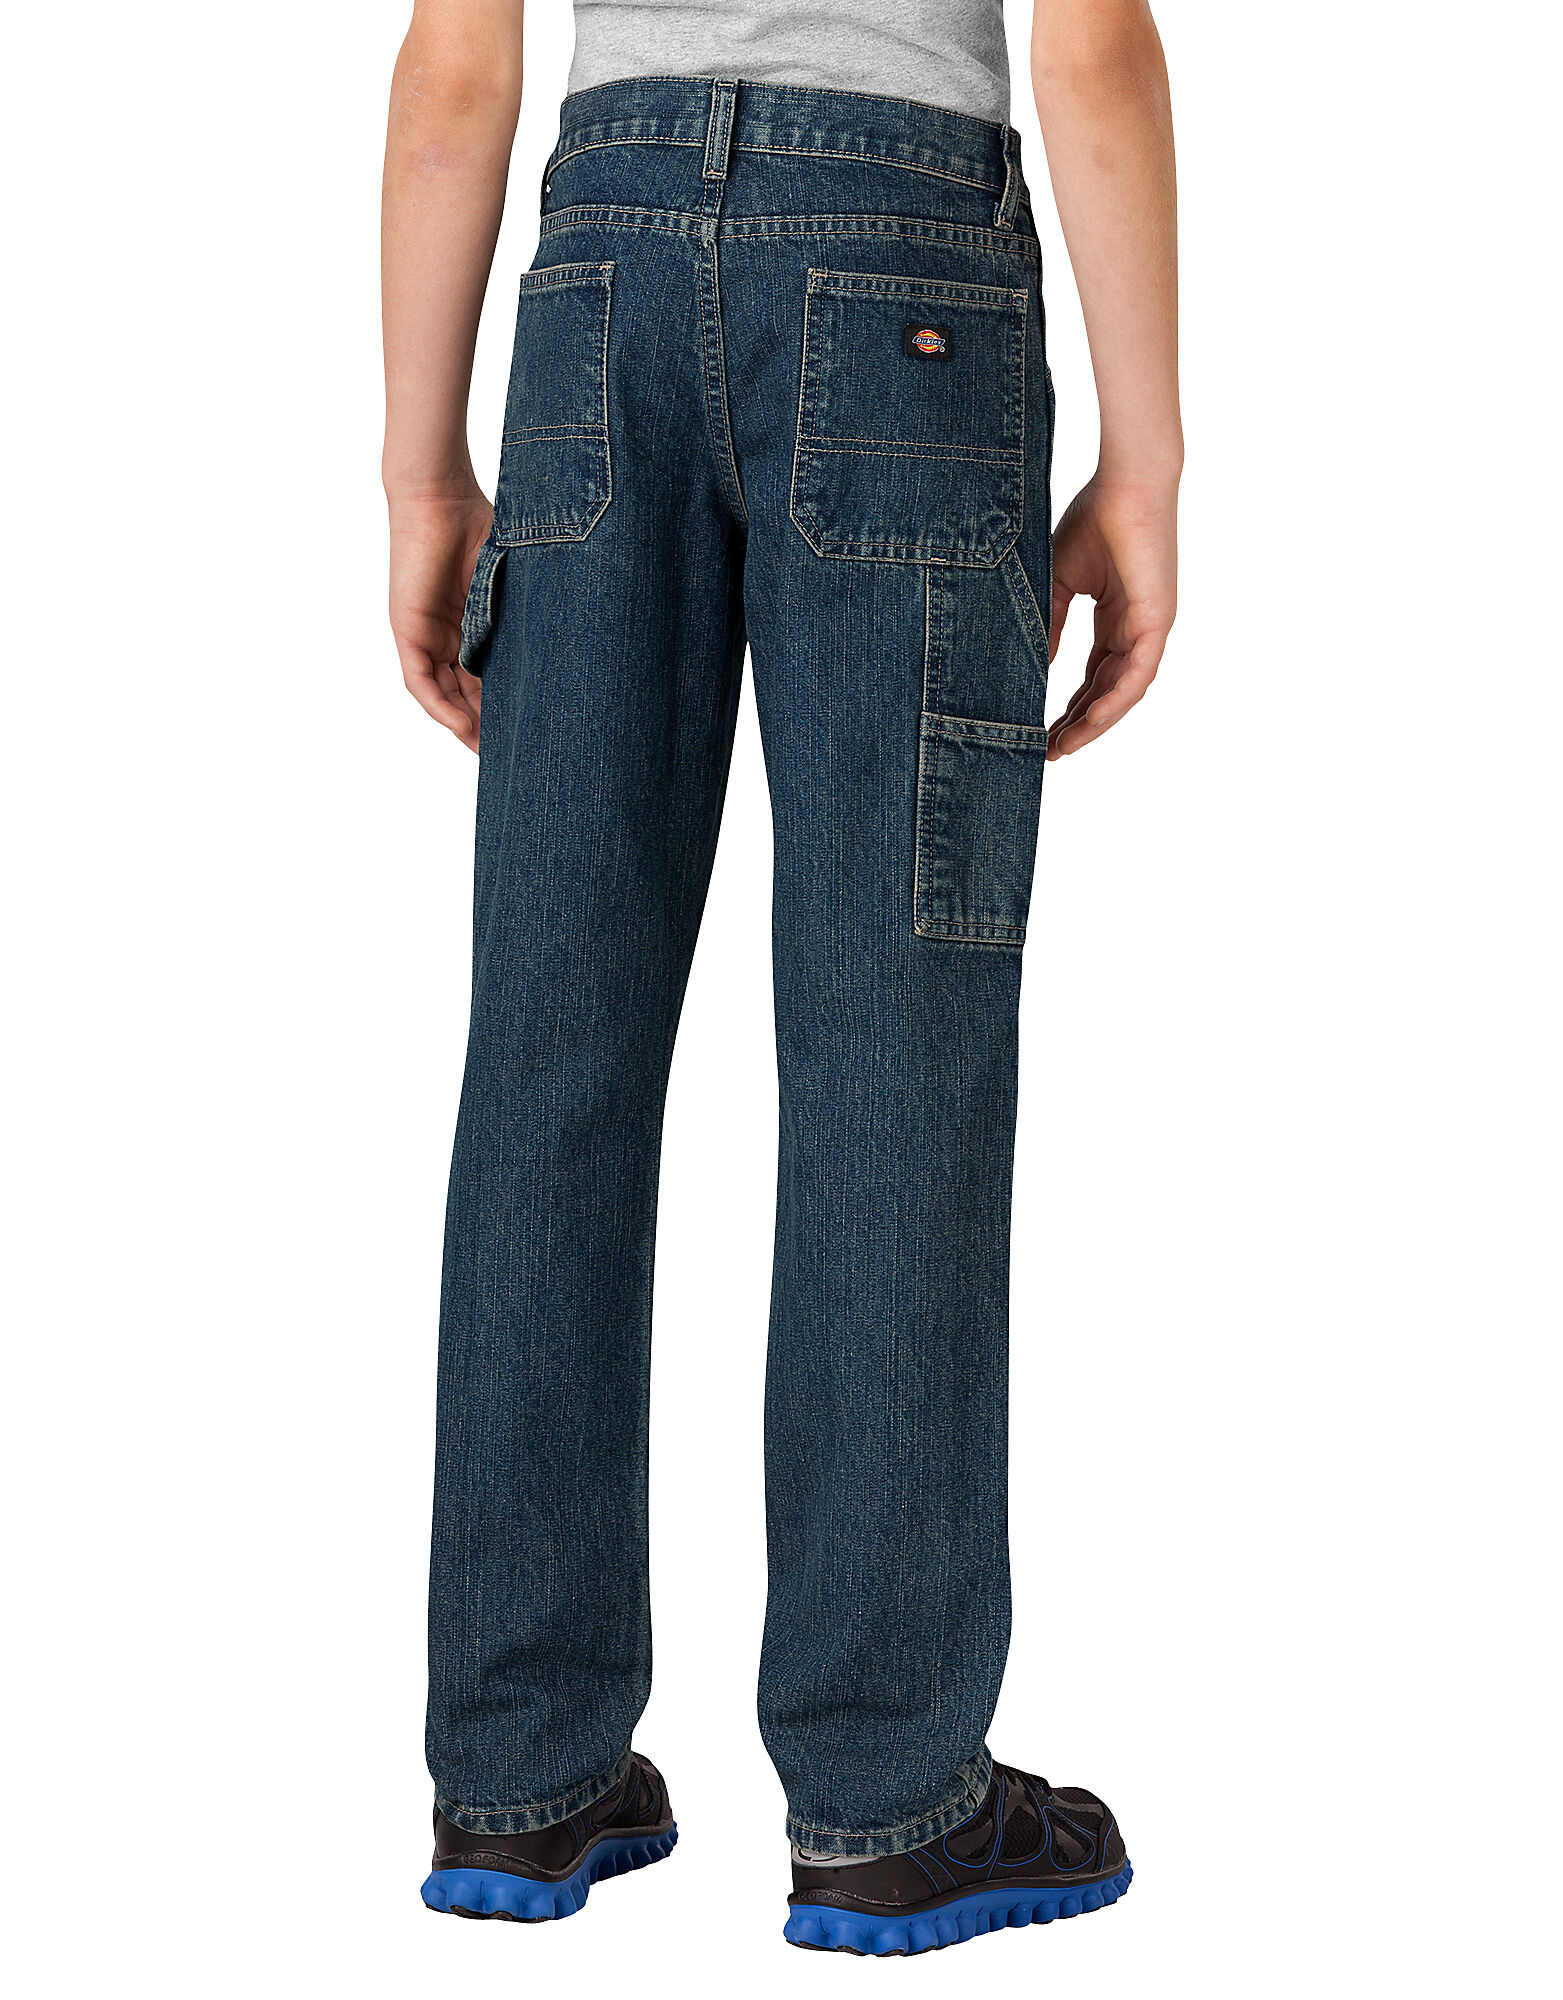 evisu jeans price